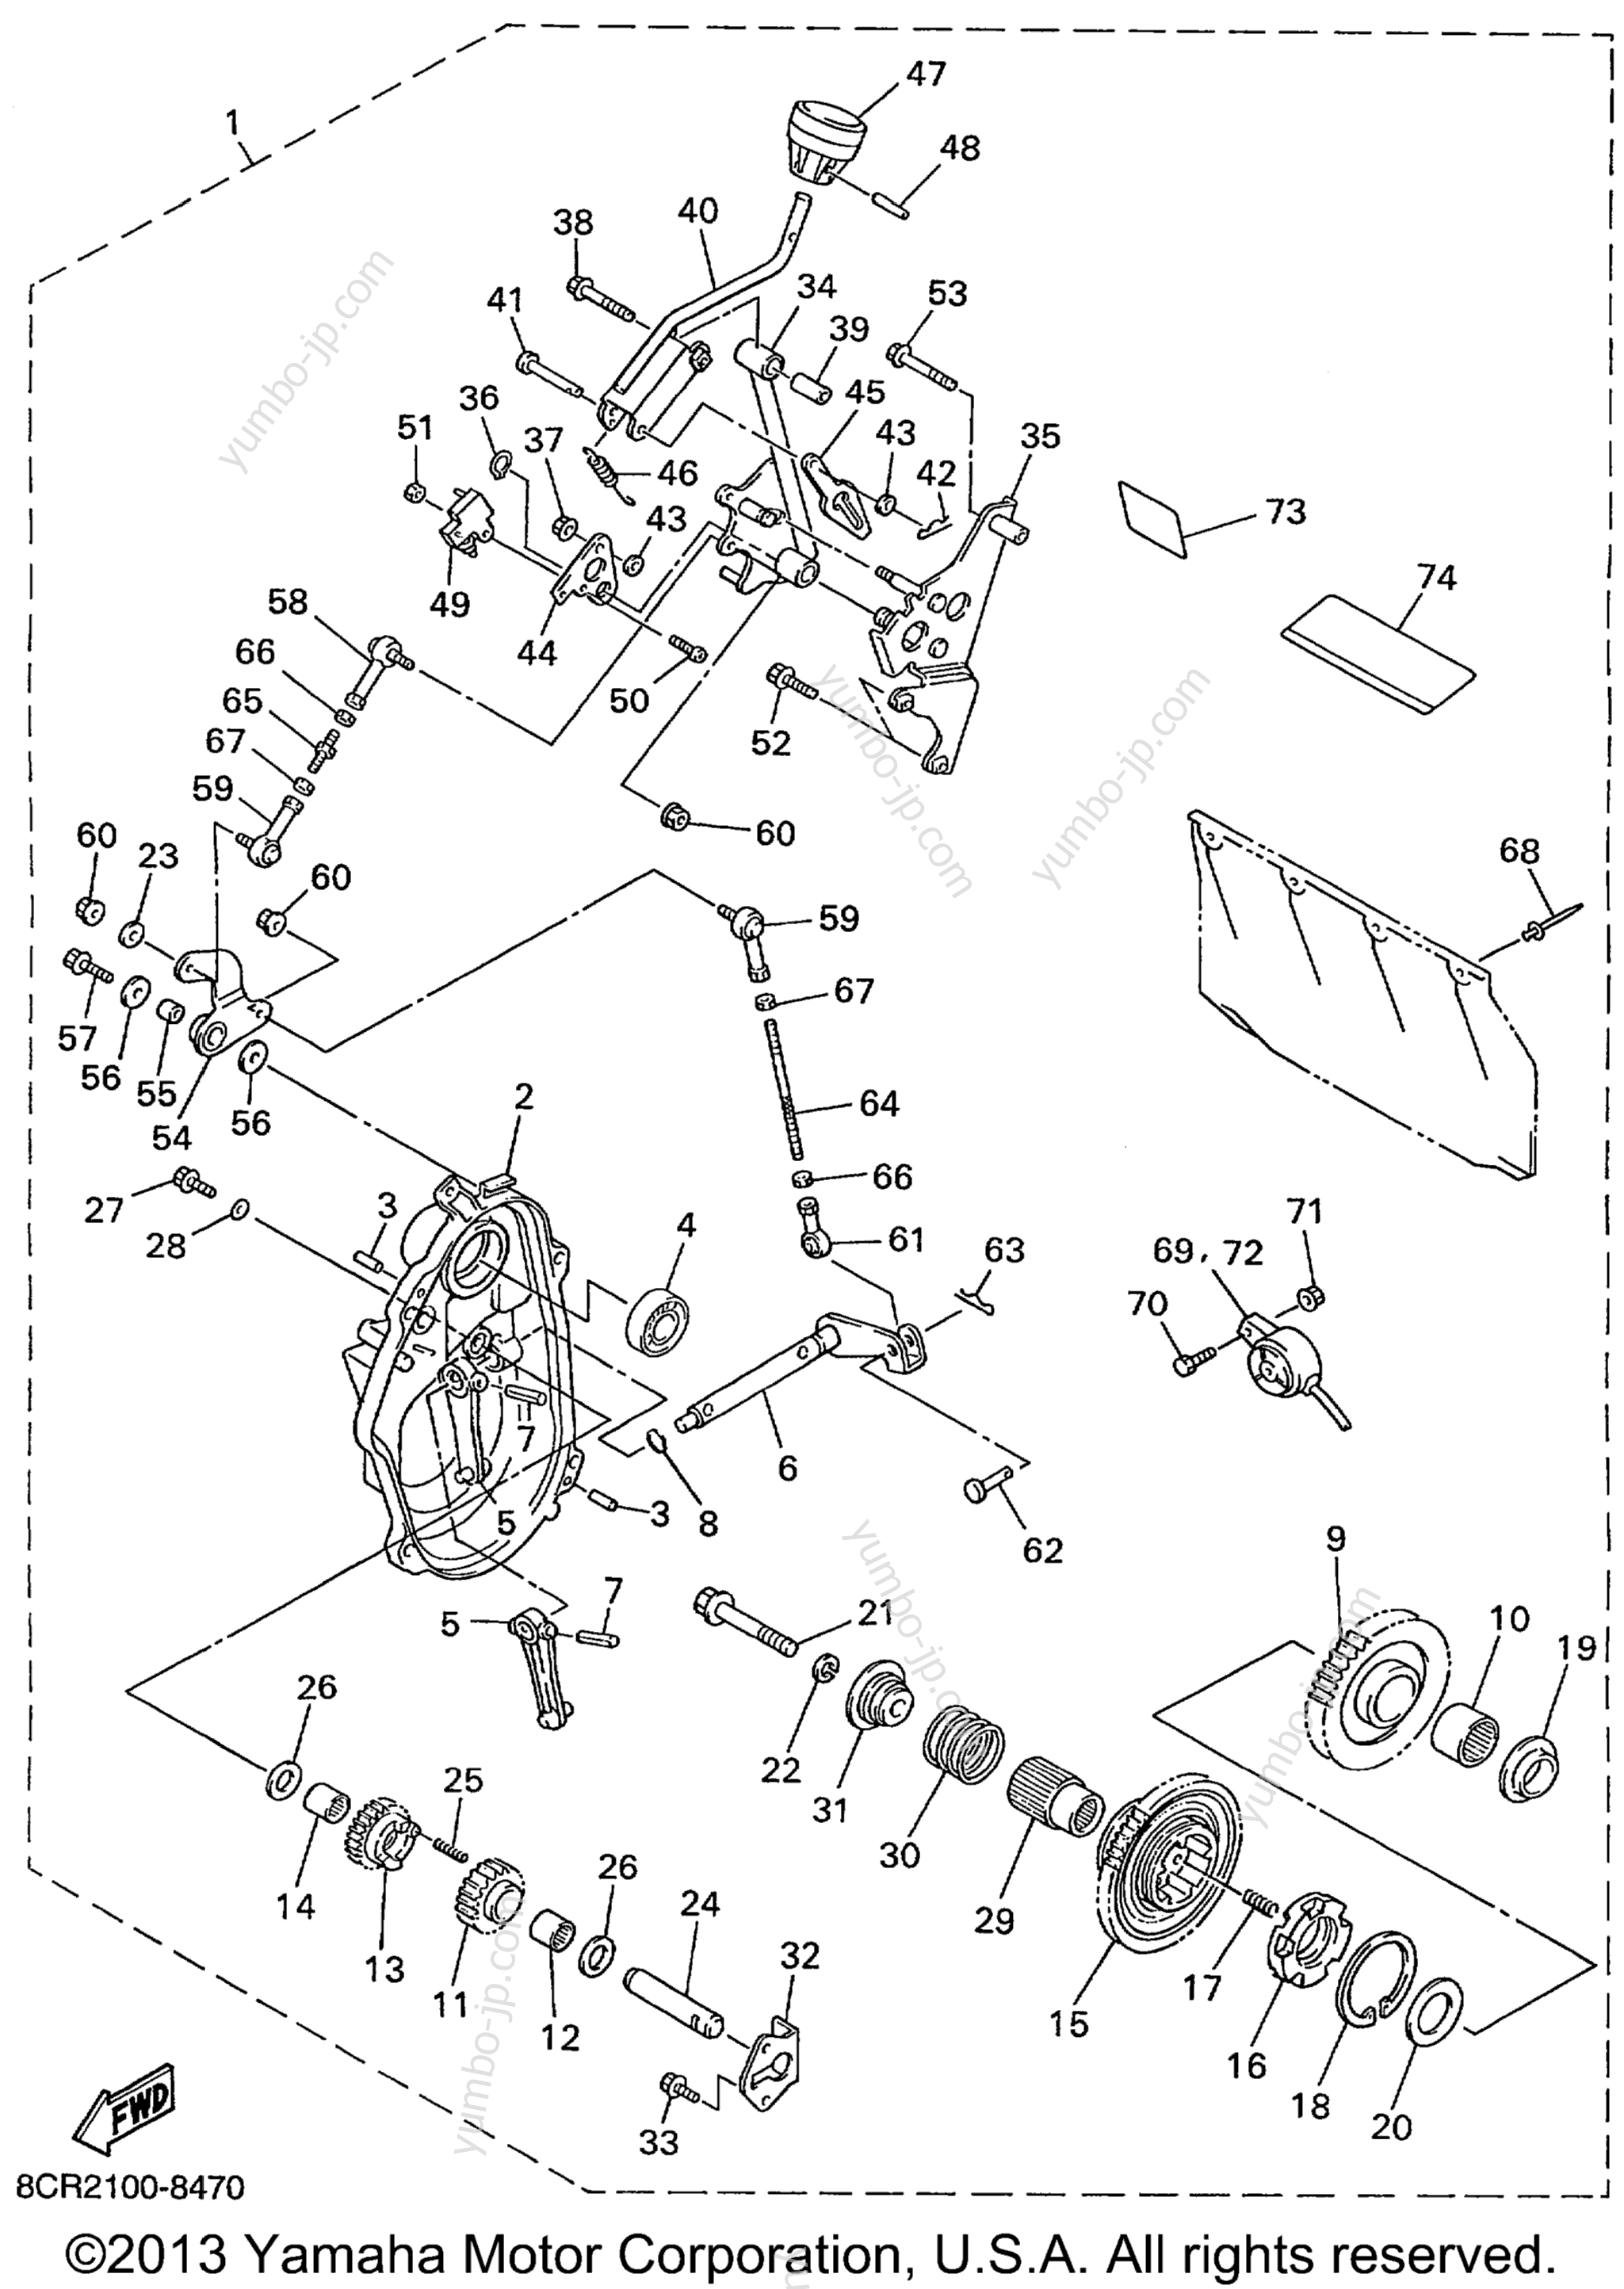 Alternate Reverse Gear Kit for snowmobiles YAMAHA MOUNTAIN MAX 600 (MM600G) 2002 year